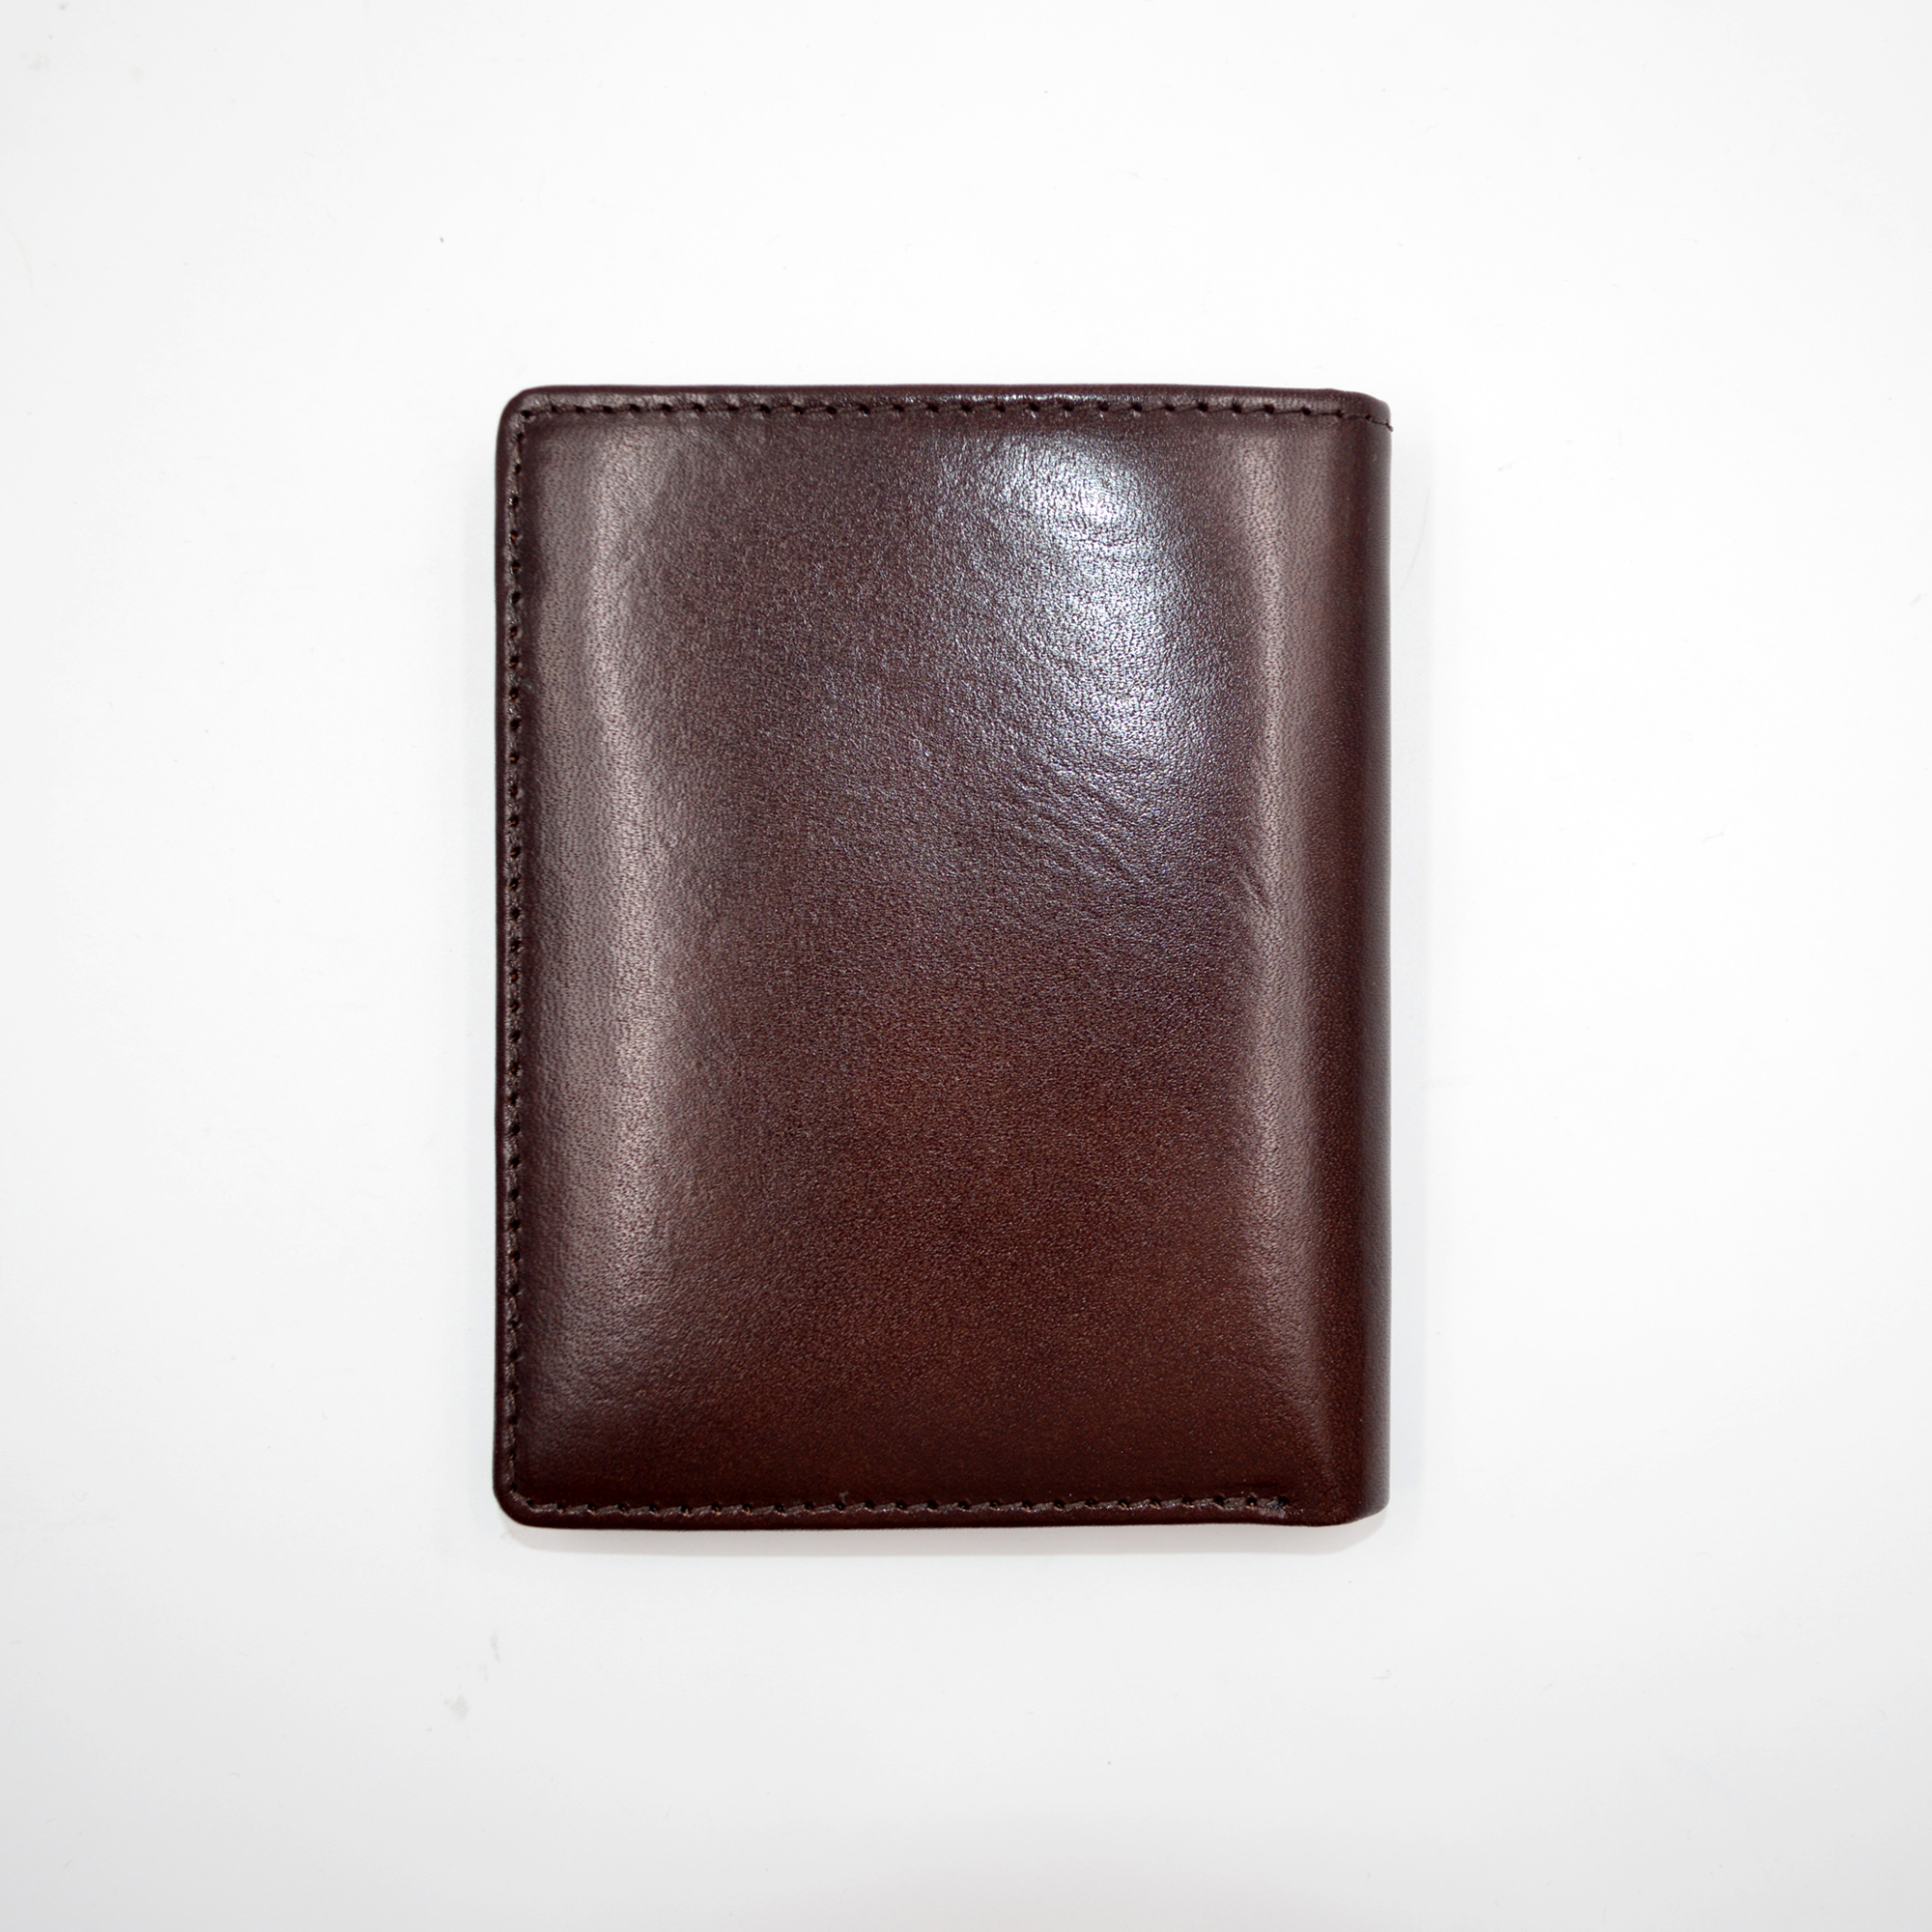 New Design Wallet Factory-New Design Wallets-New Design Wallets Lieferanten